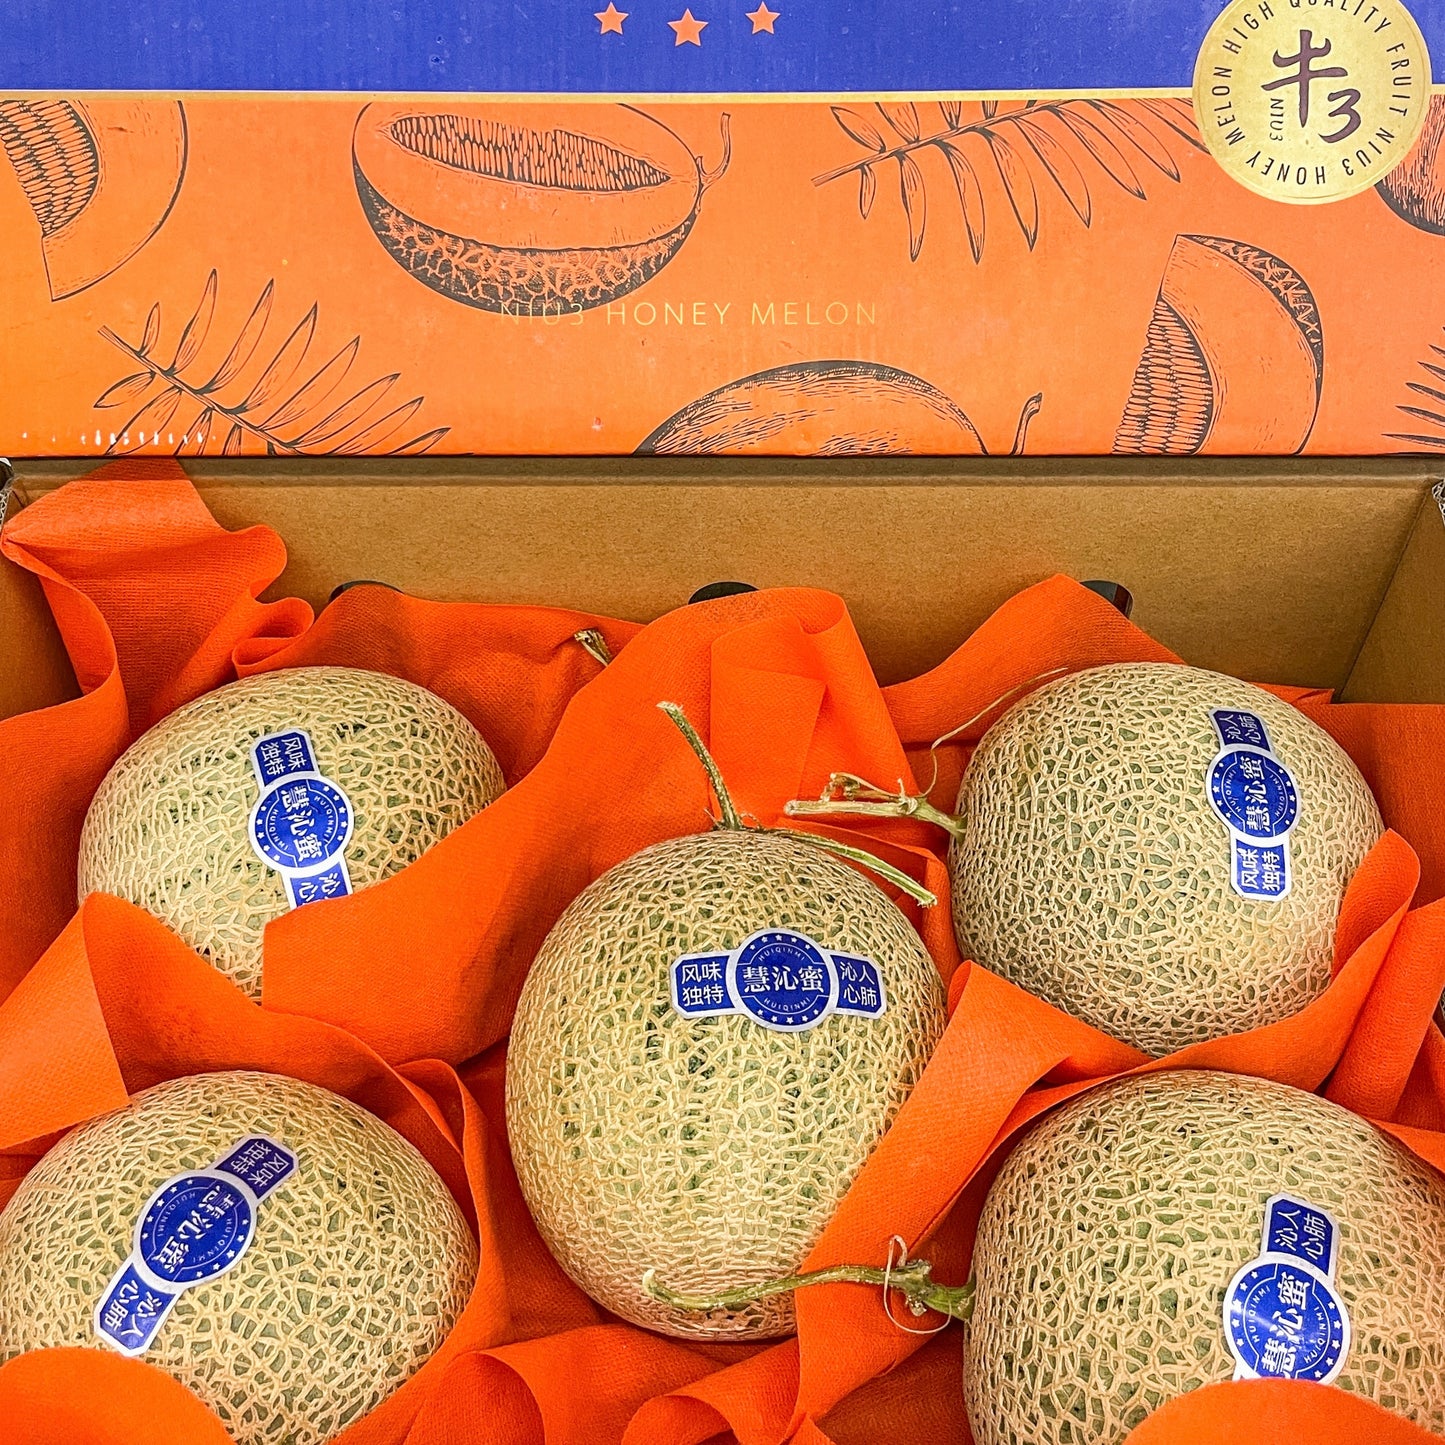 Japan Variety Musk Melon